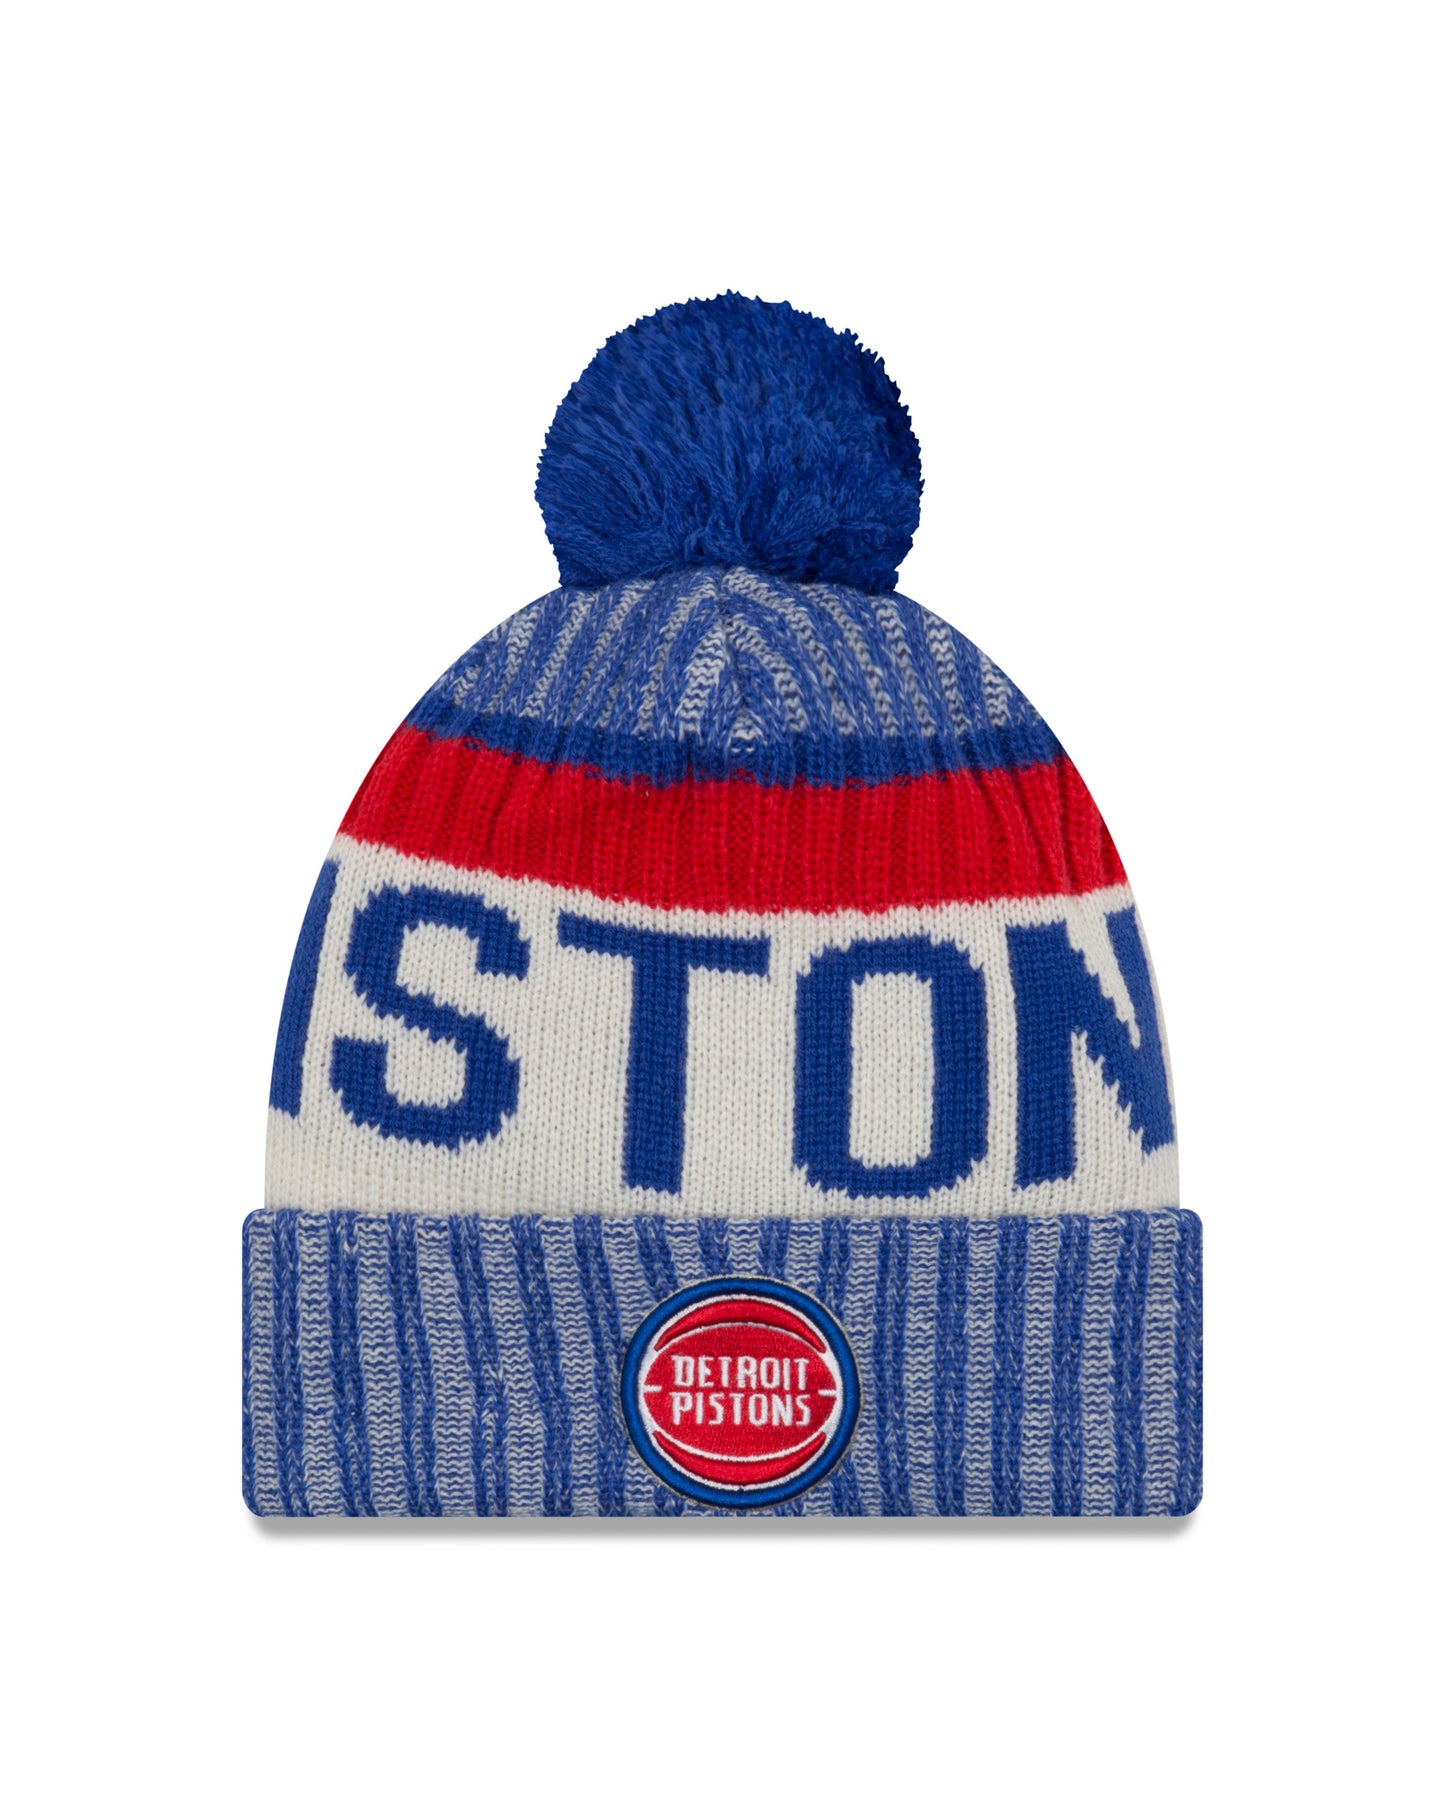 Detroit Pistons NBA Sport Knit Hat By New Era